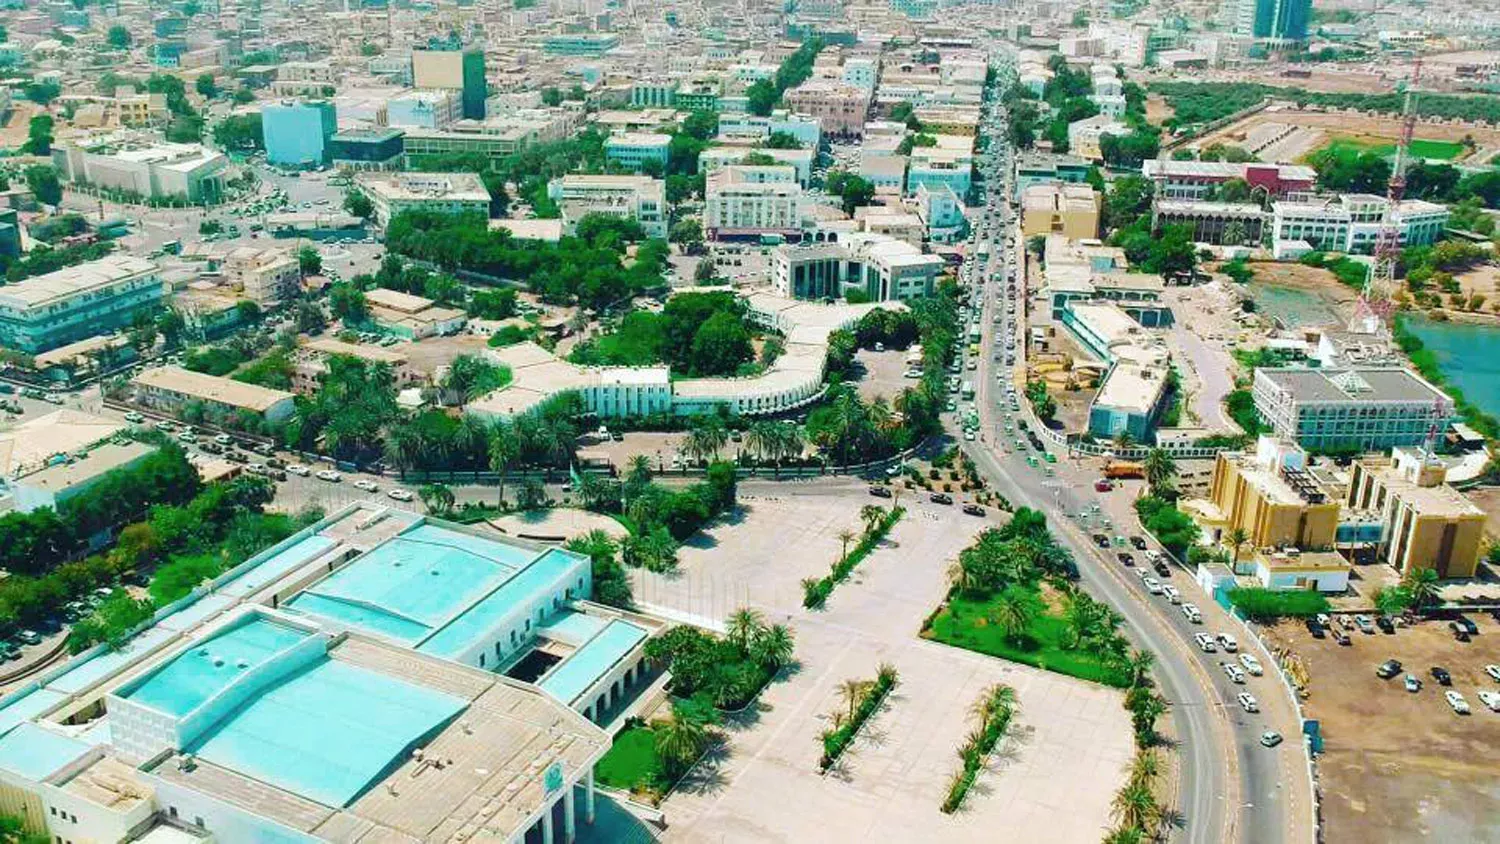 Aerial view of Djibouti city